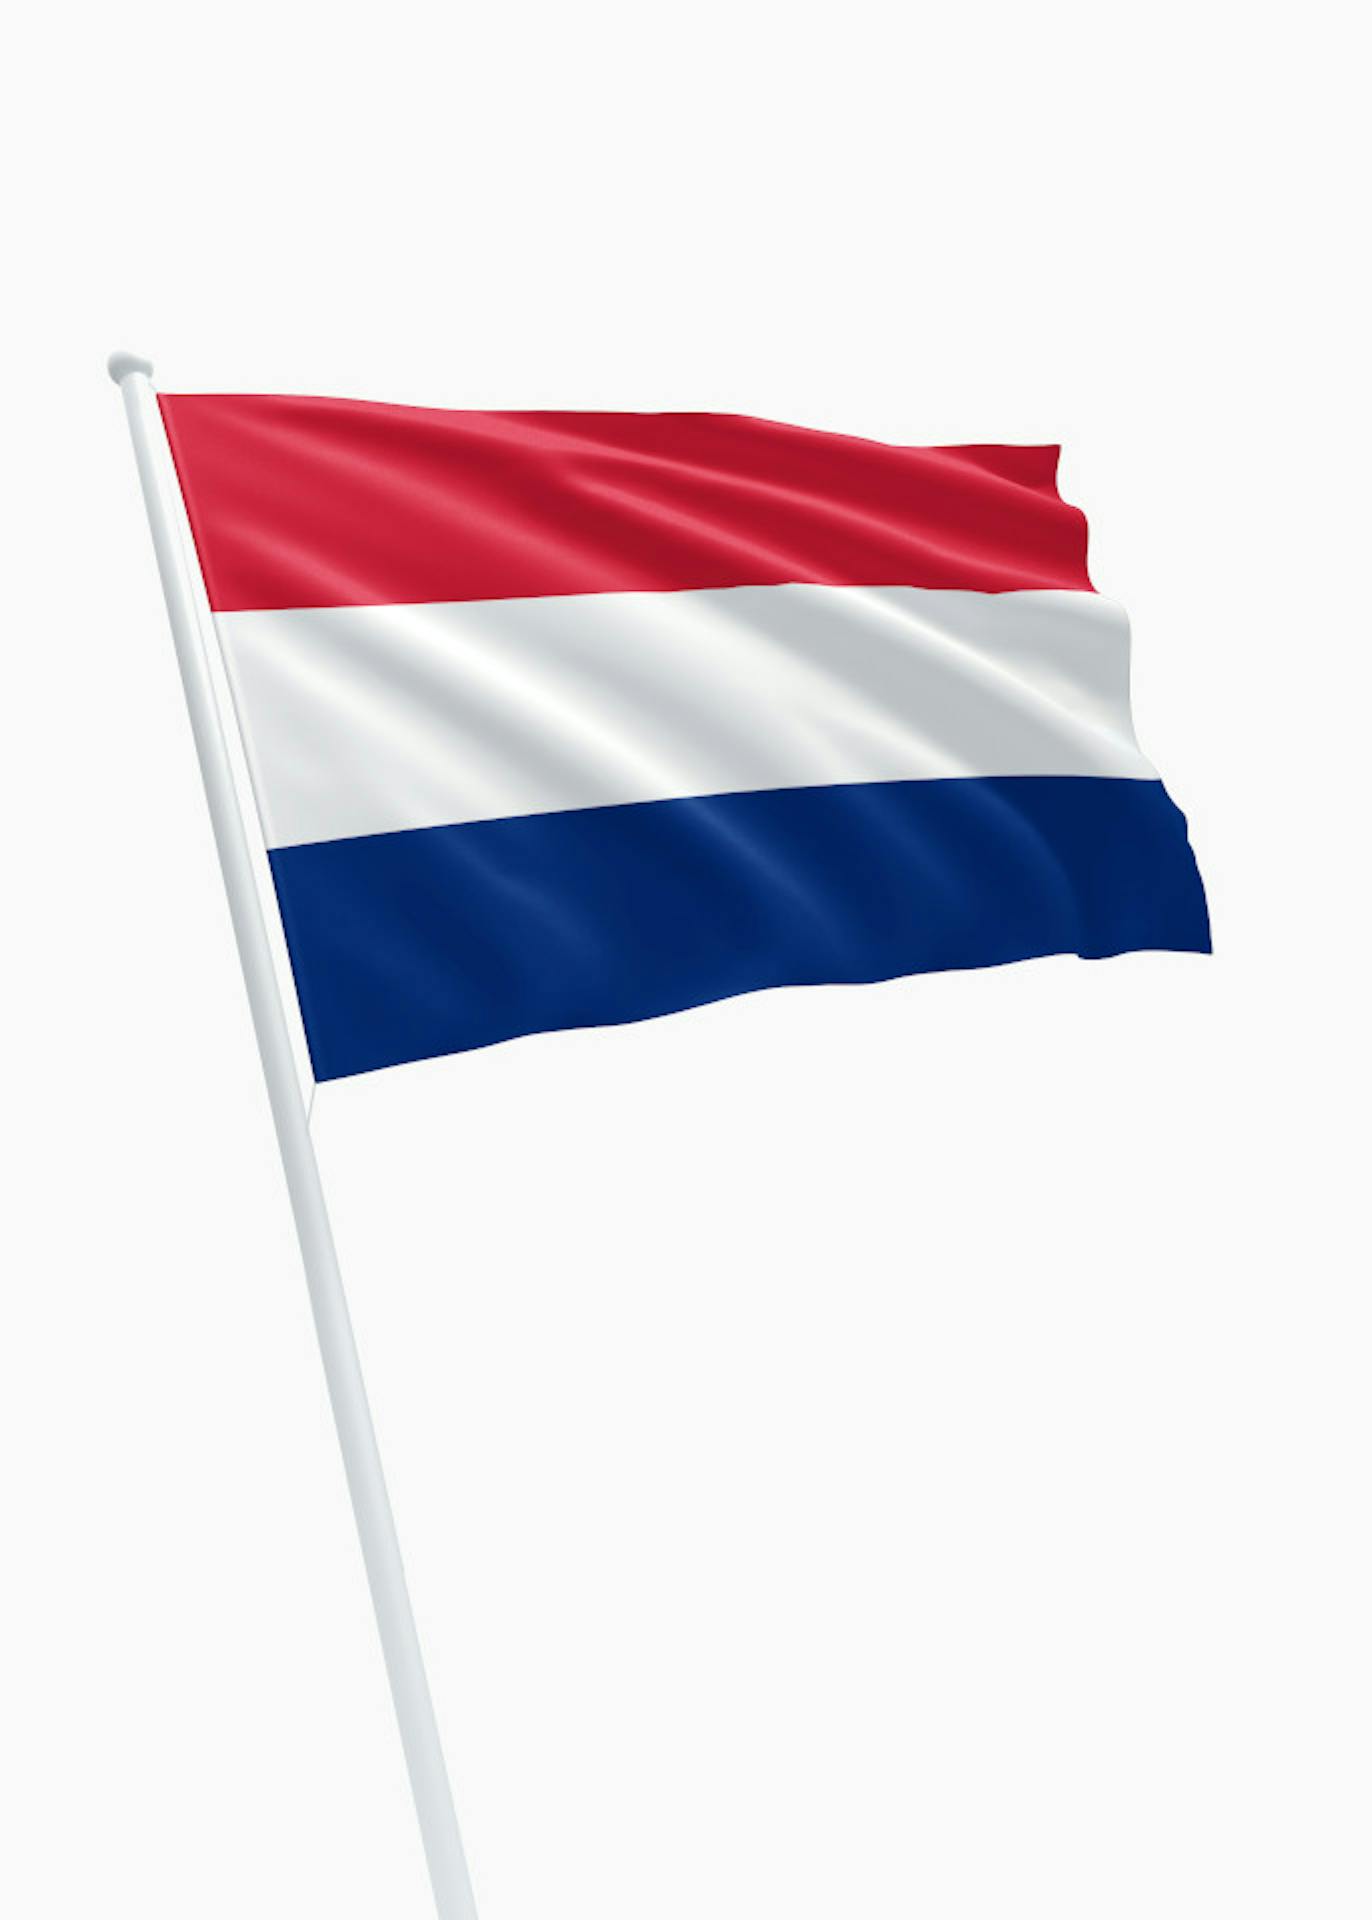 horizon rukken legaal Rood-wit-marine blauwe vlag – Online bestellen – DVC